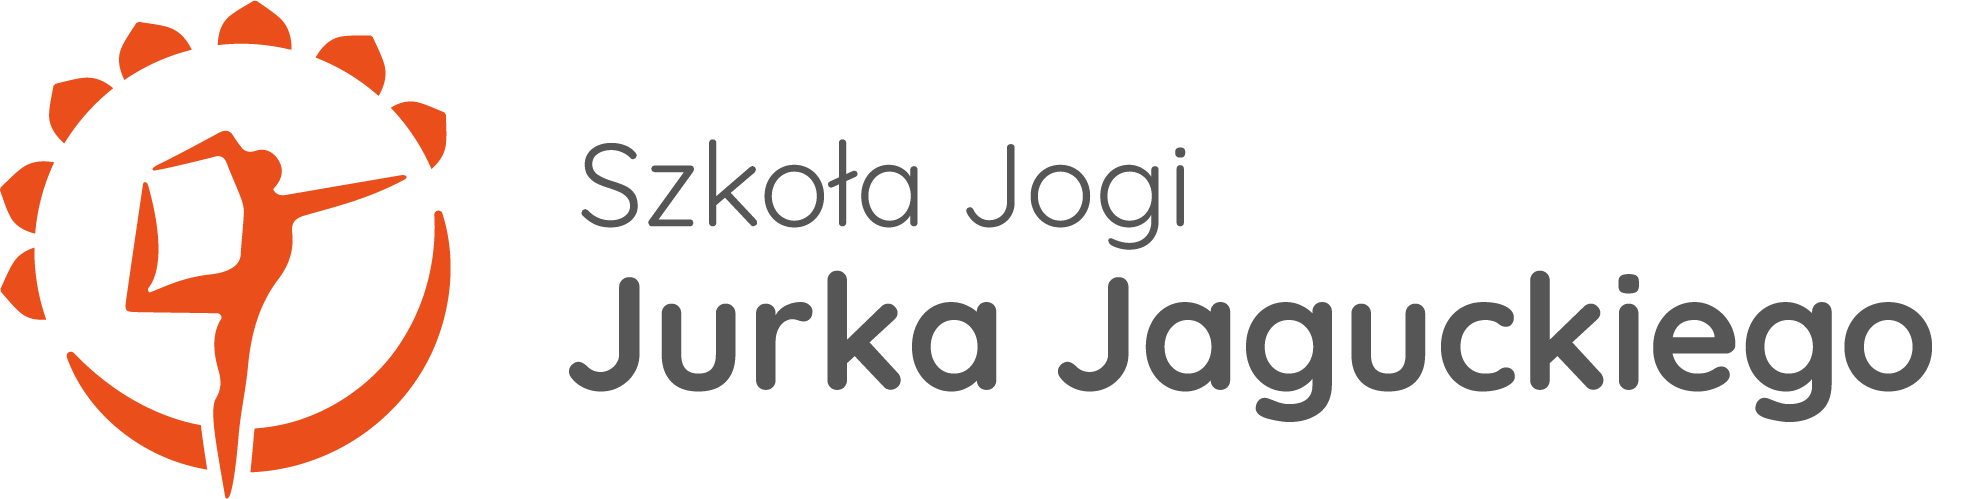 Szkoła Jogi Jurka Jaguckiego